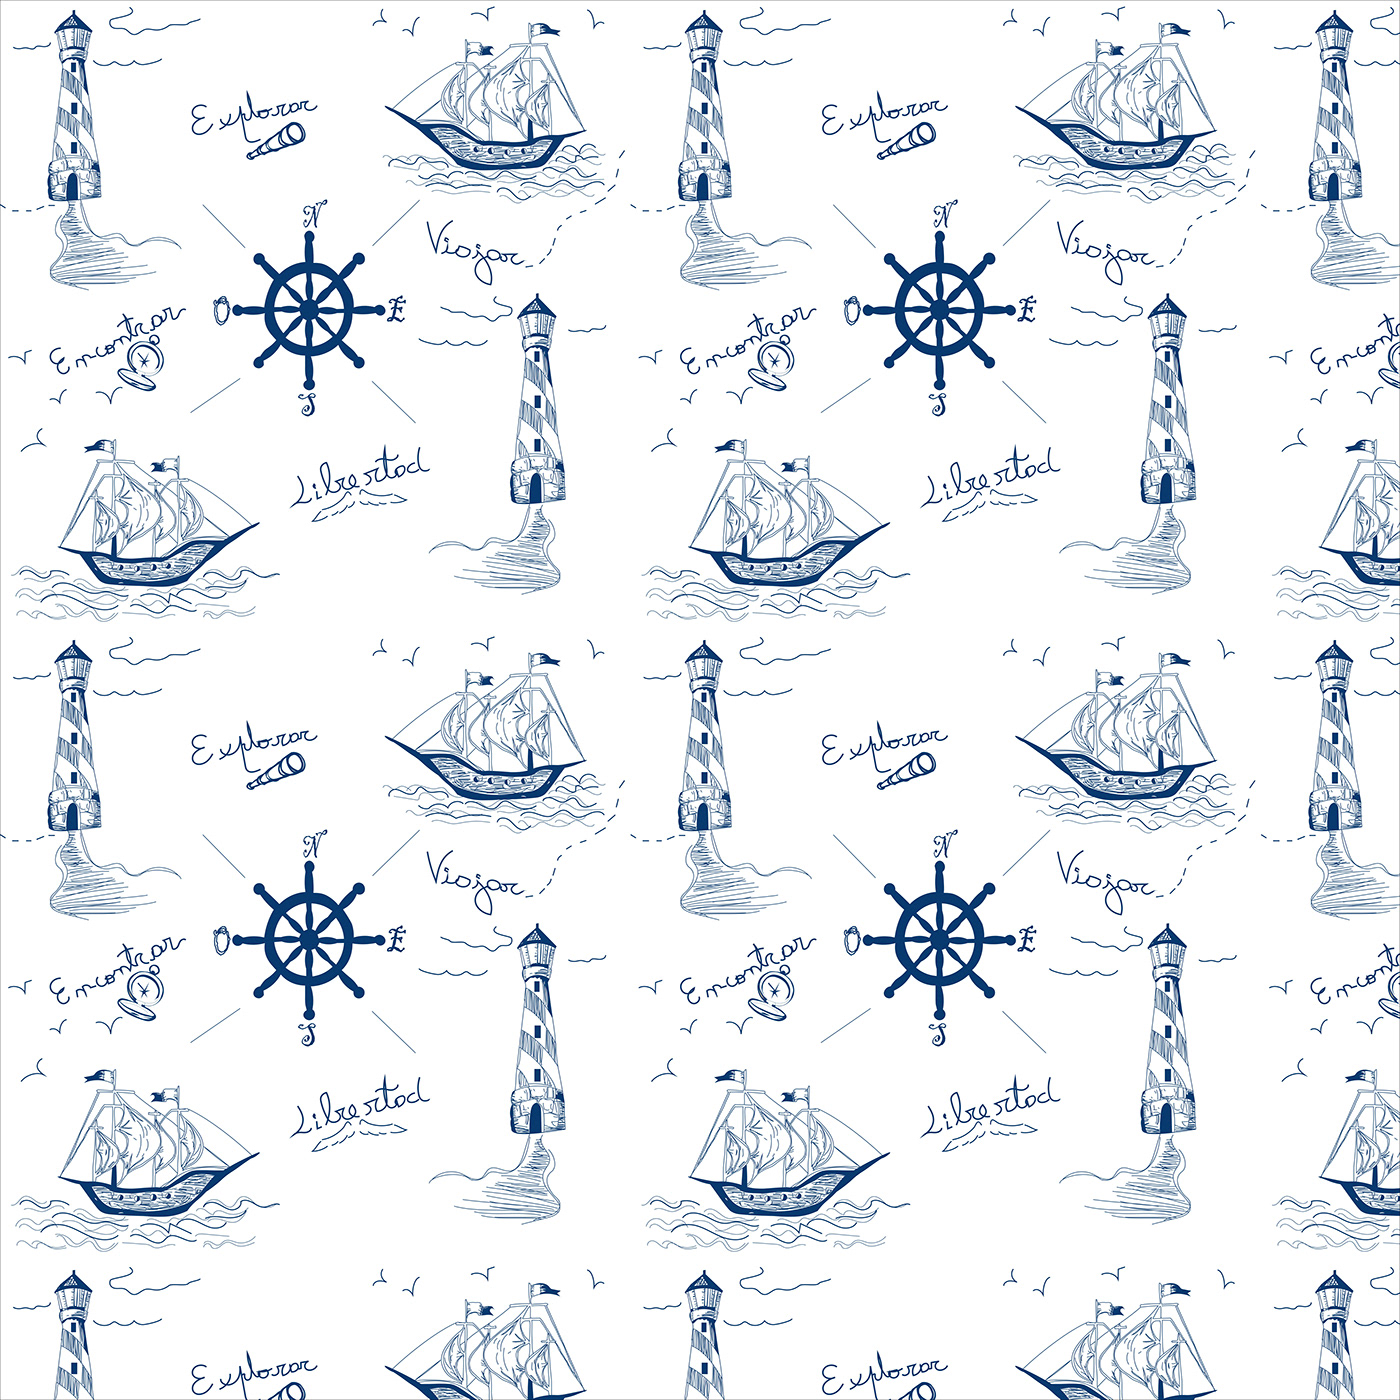 Diseño Textil Estampa Illustrator monocromatico pattern toule de jouy marinero patterndesing rapport surfpattern